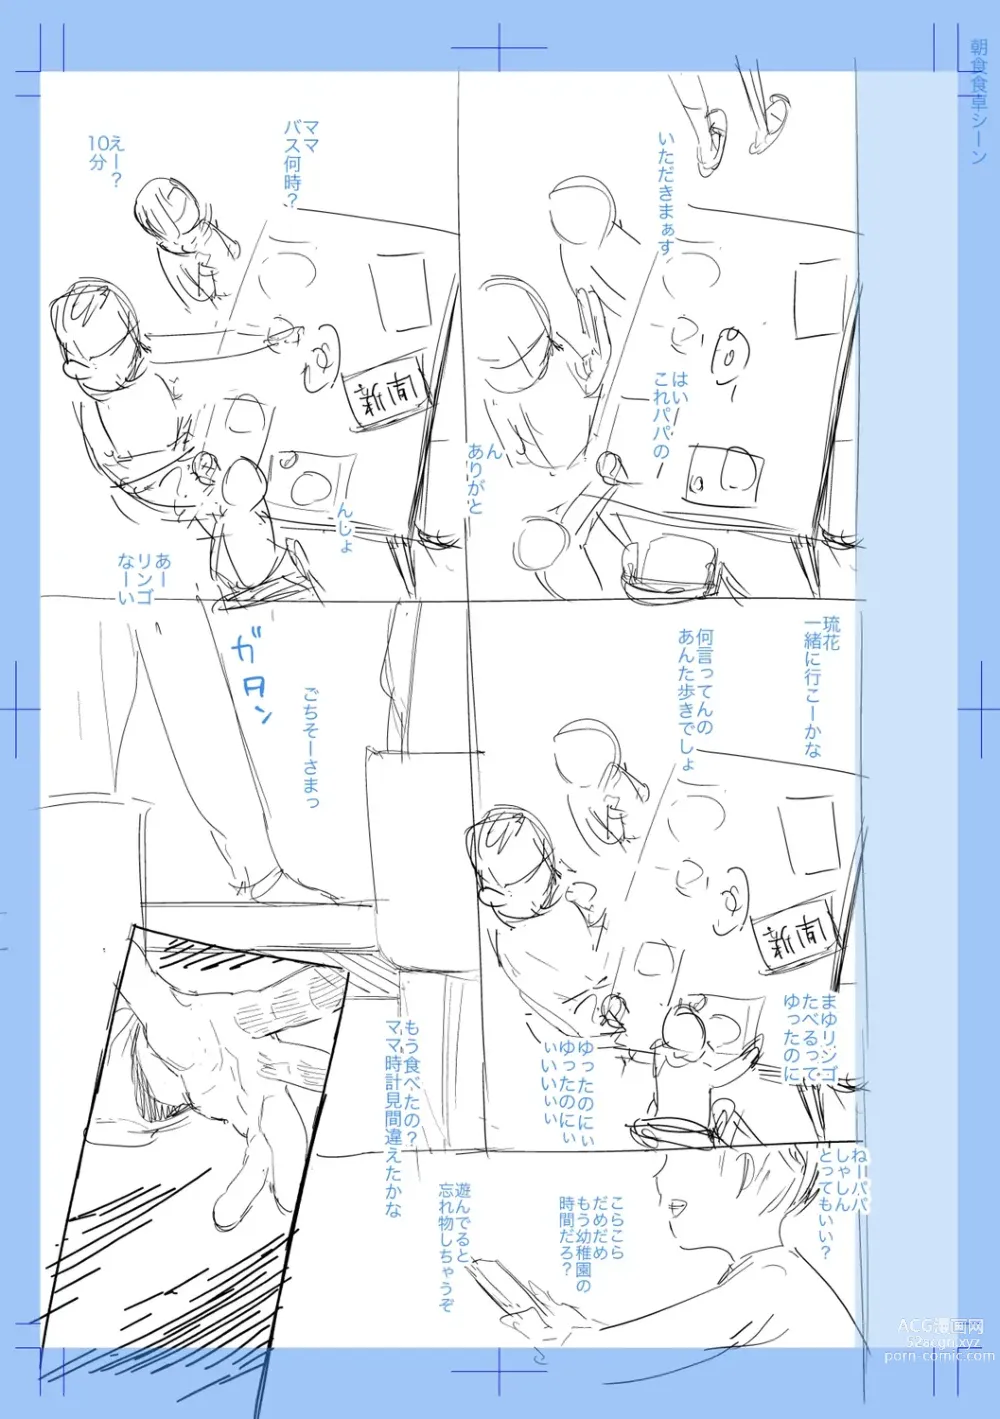 Page 233 of manga Hitoketakko Adorable